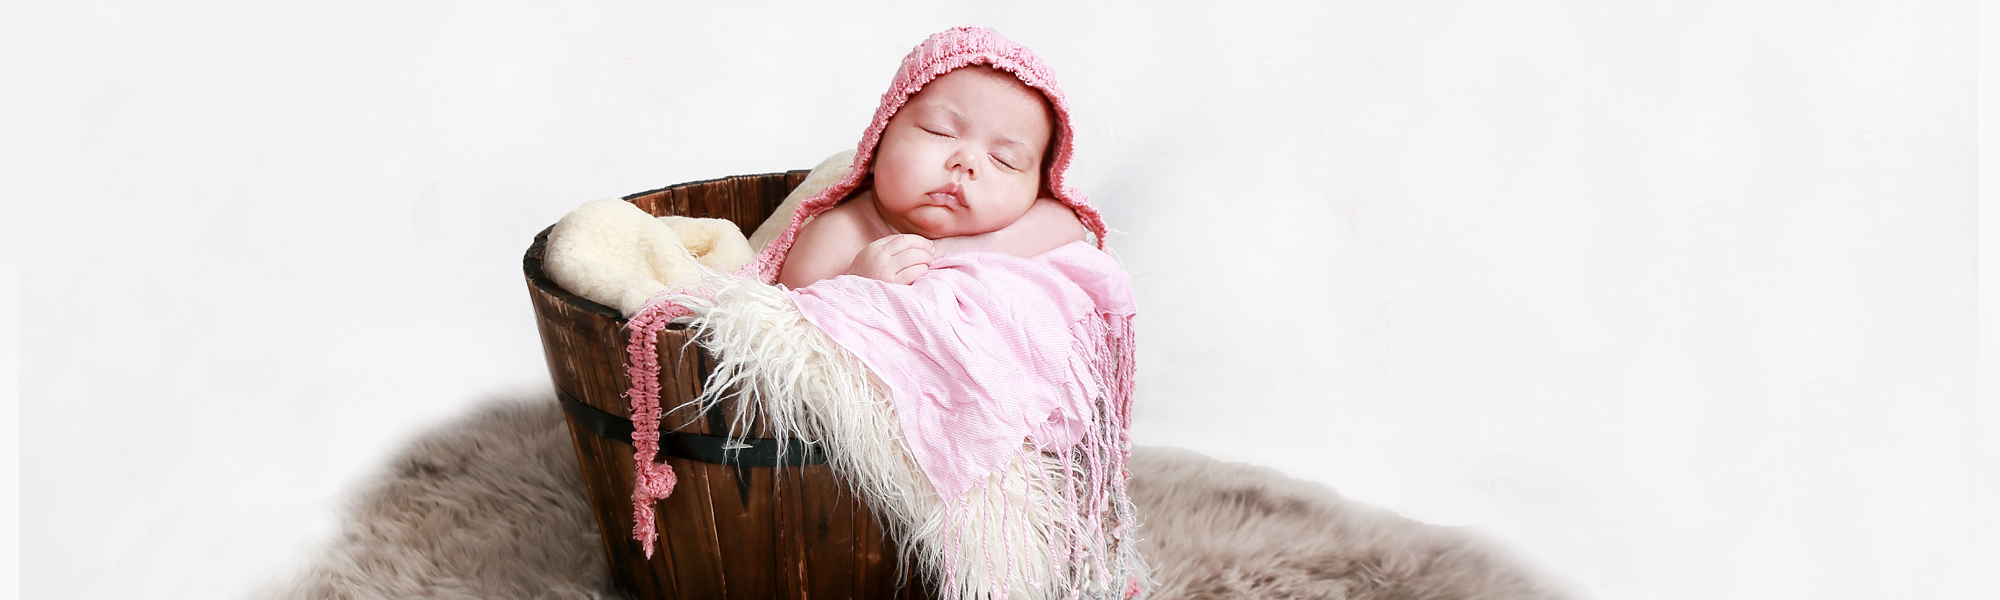 photograph of a sleeping newborn baby